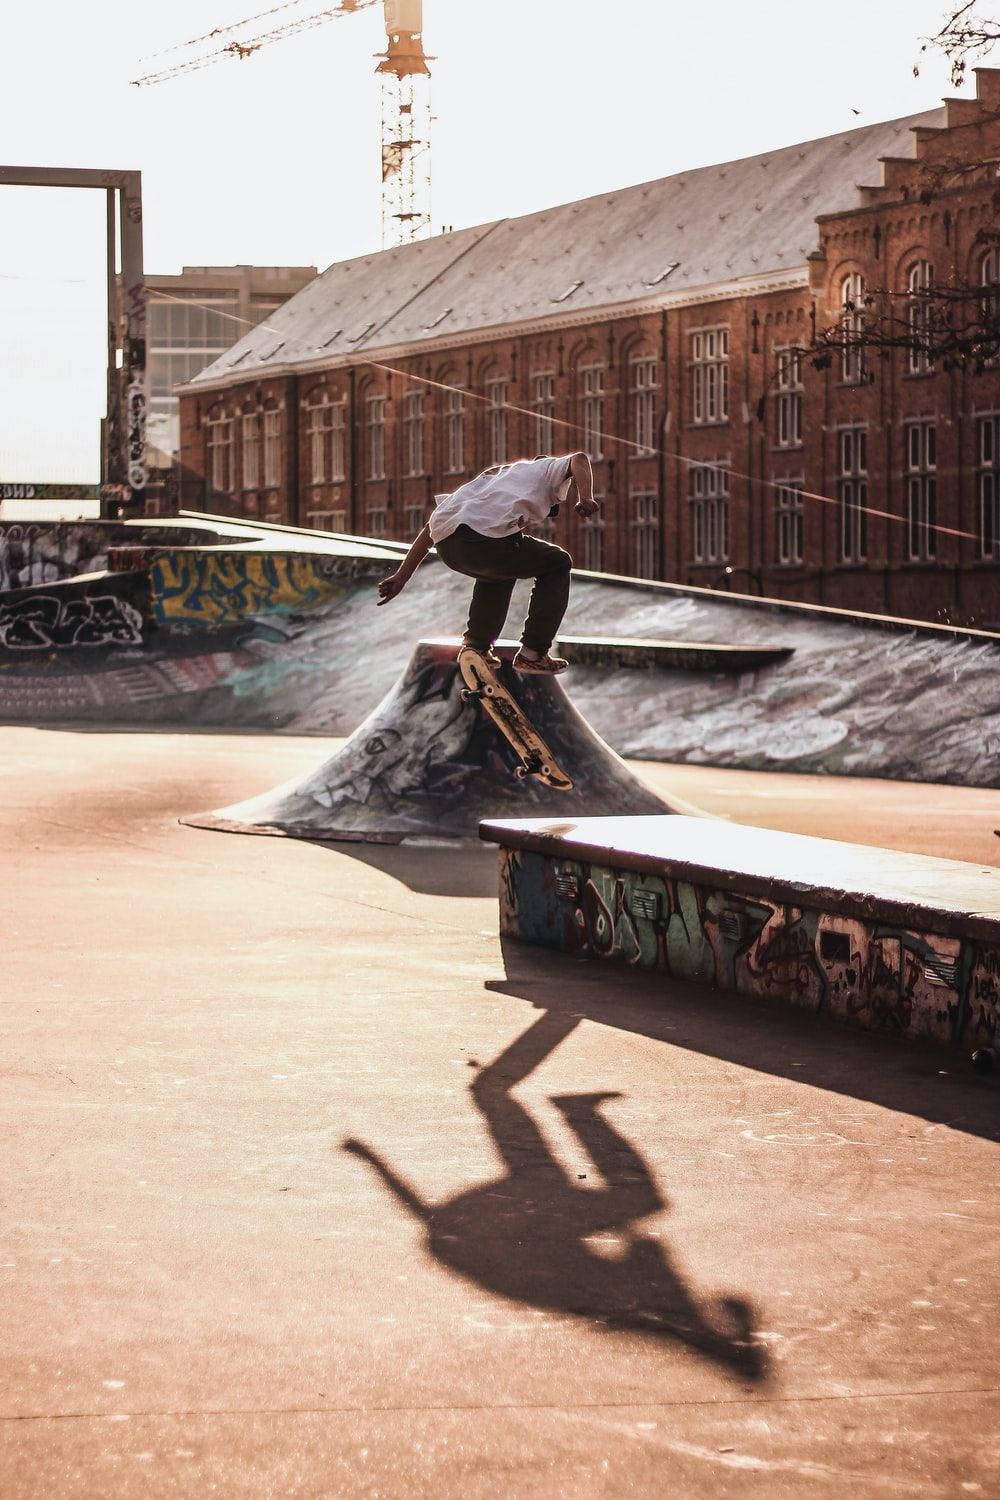 Aesthetic Skateboard Park Picture